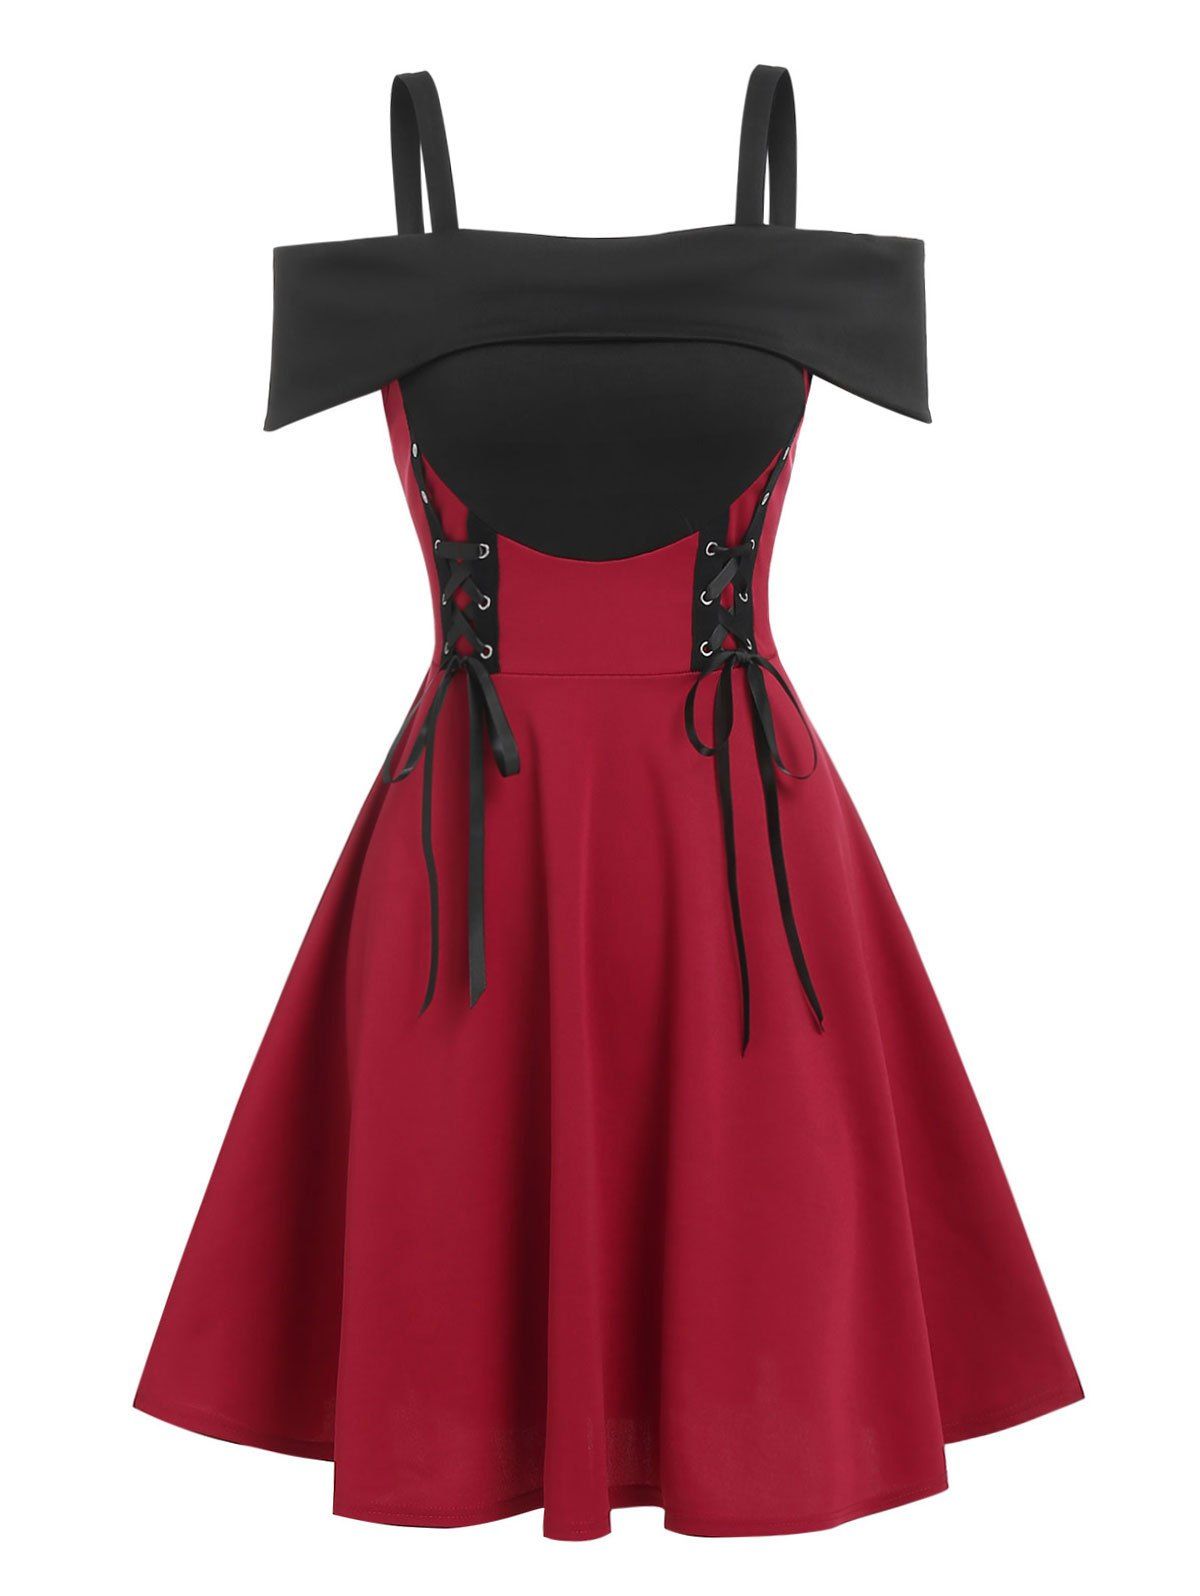 Lace Up Corset Style Cold Shoulder Plaid Dress - RED 2XL